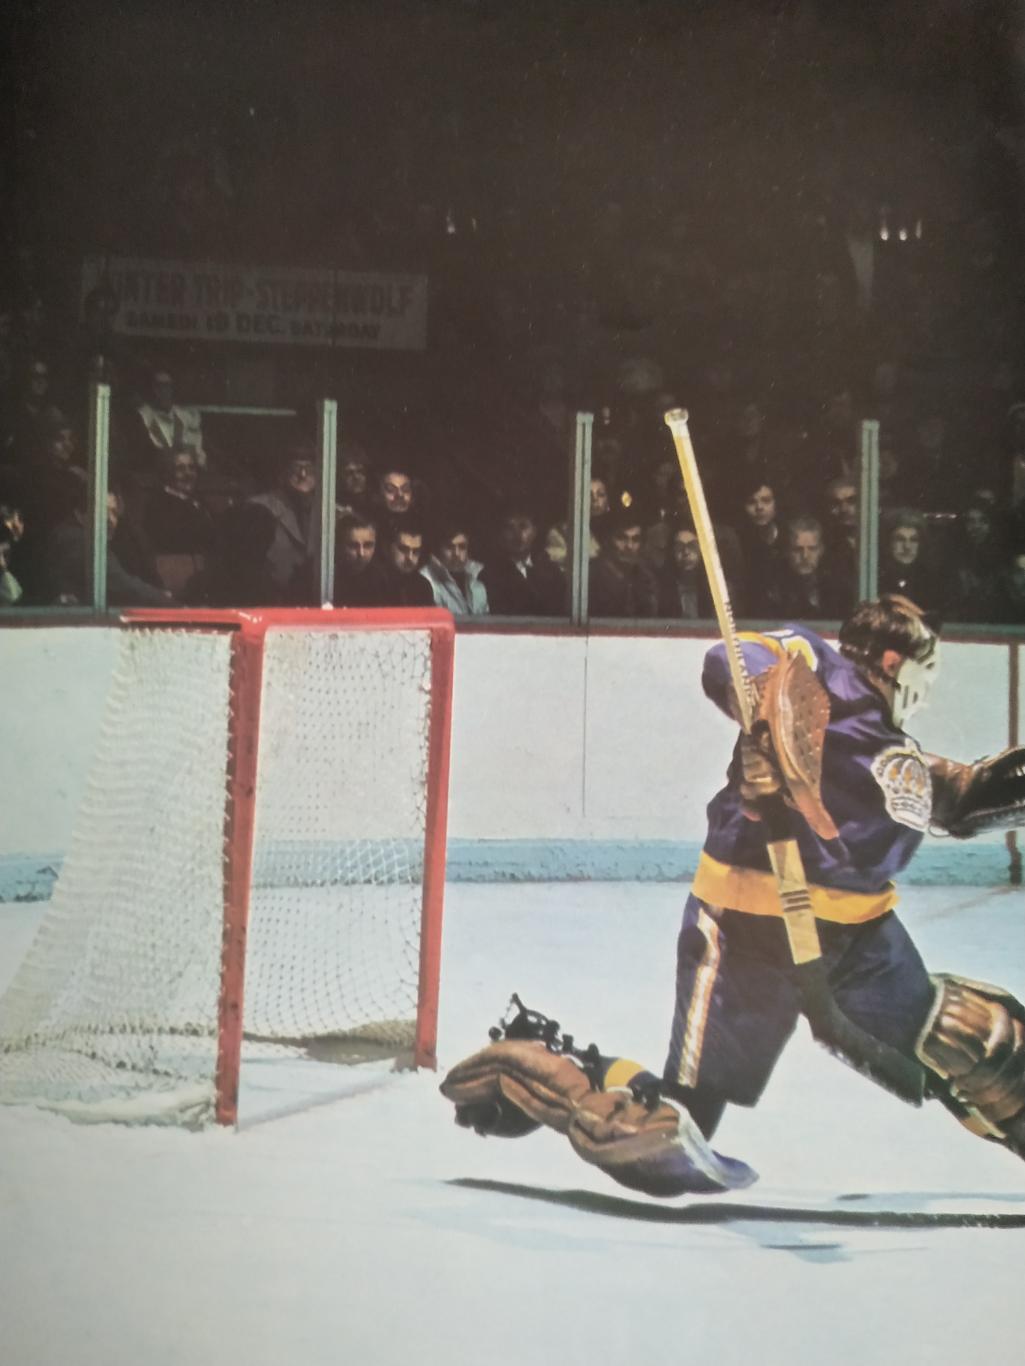 ХОККЕЙ ПРОГРАММА АЛЬБОМ ЛОС АНДЖЕЛЕС НХЛ NHL 1971 DEC.01 LOS ANGELES PROGRAM 5